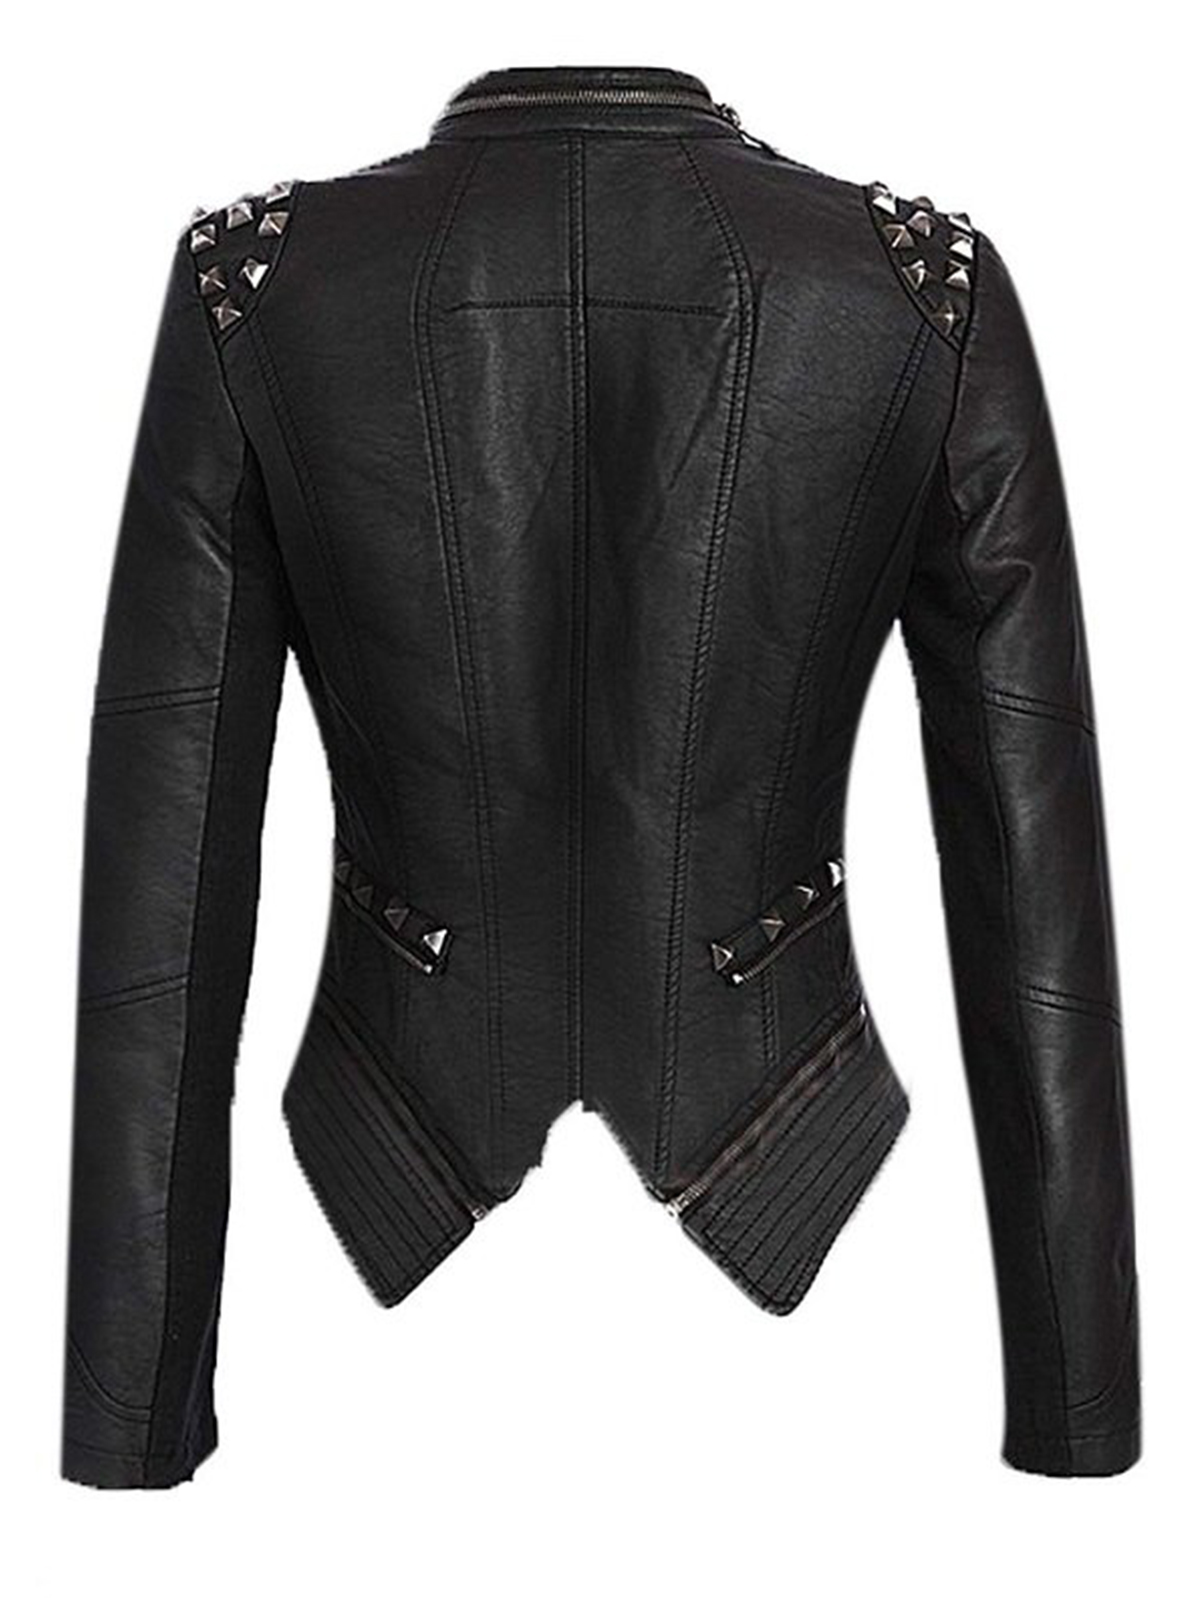 Saraya-Jade Bevis Studded Black Jacket